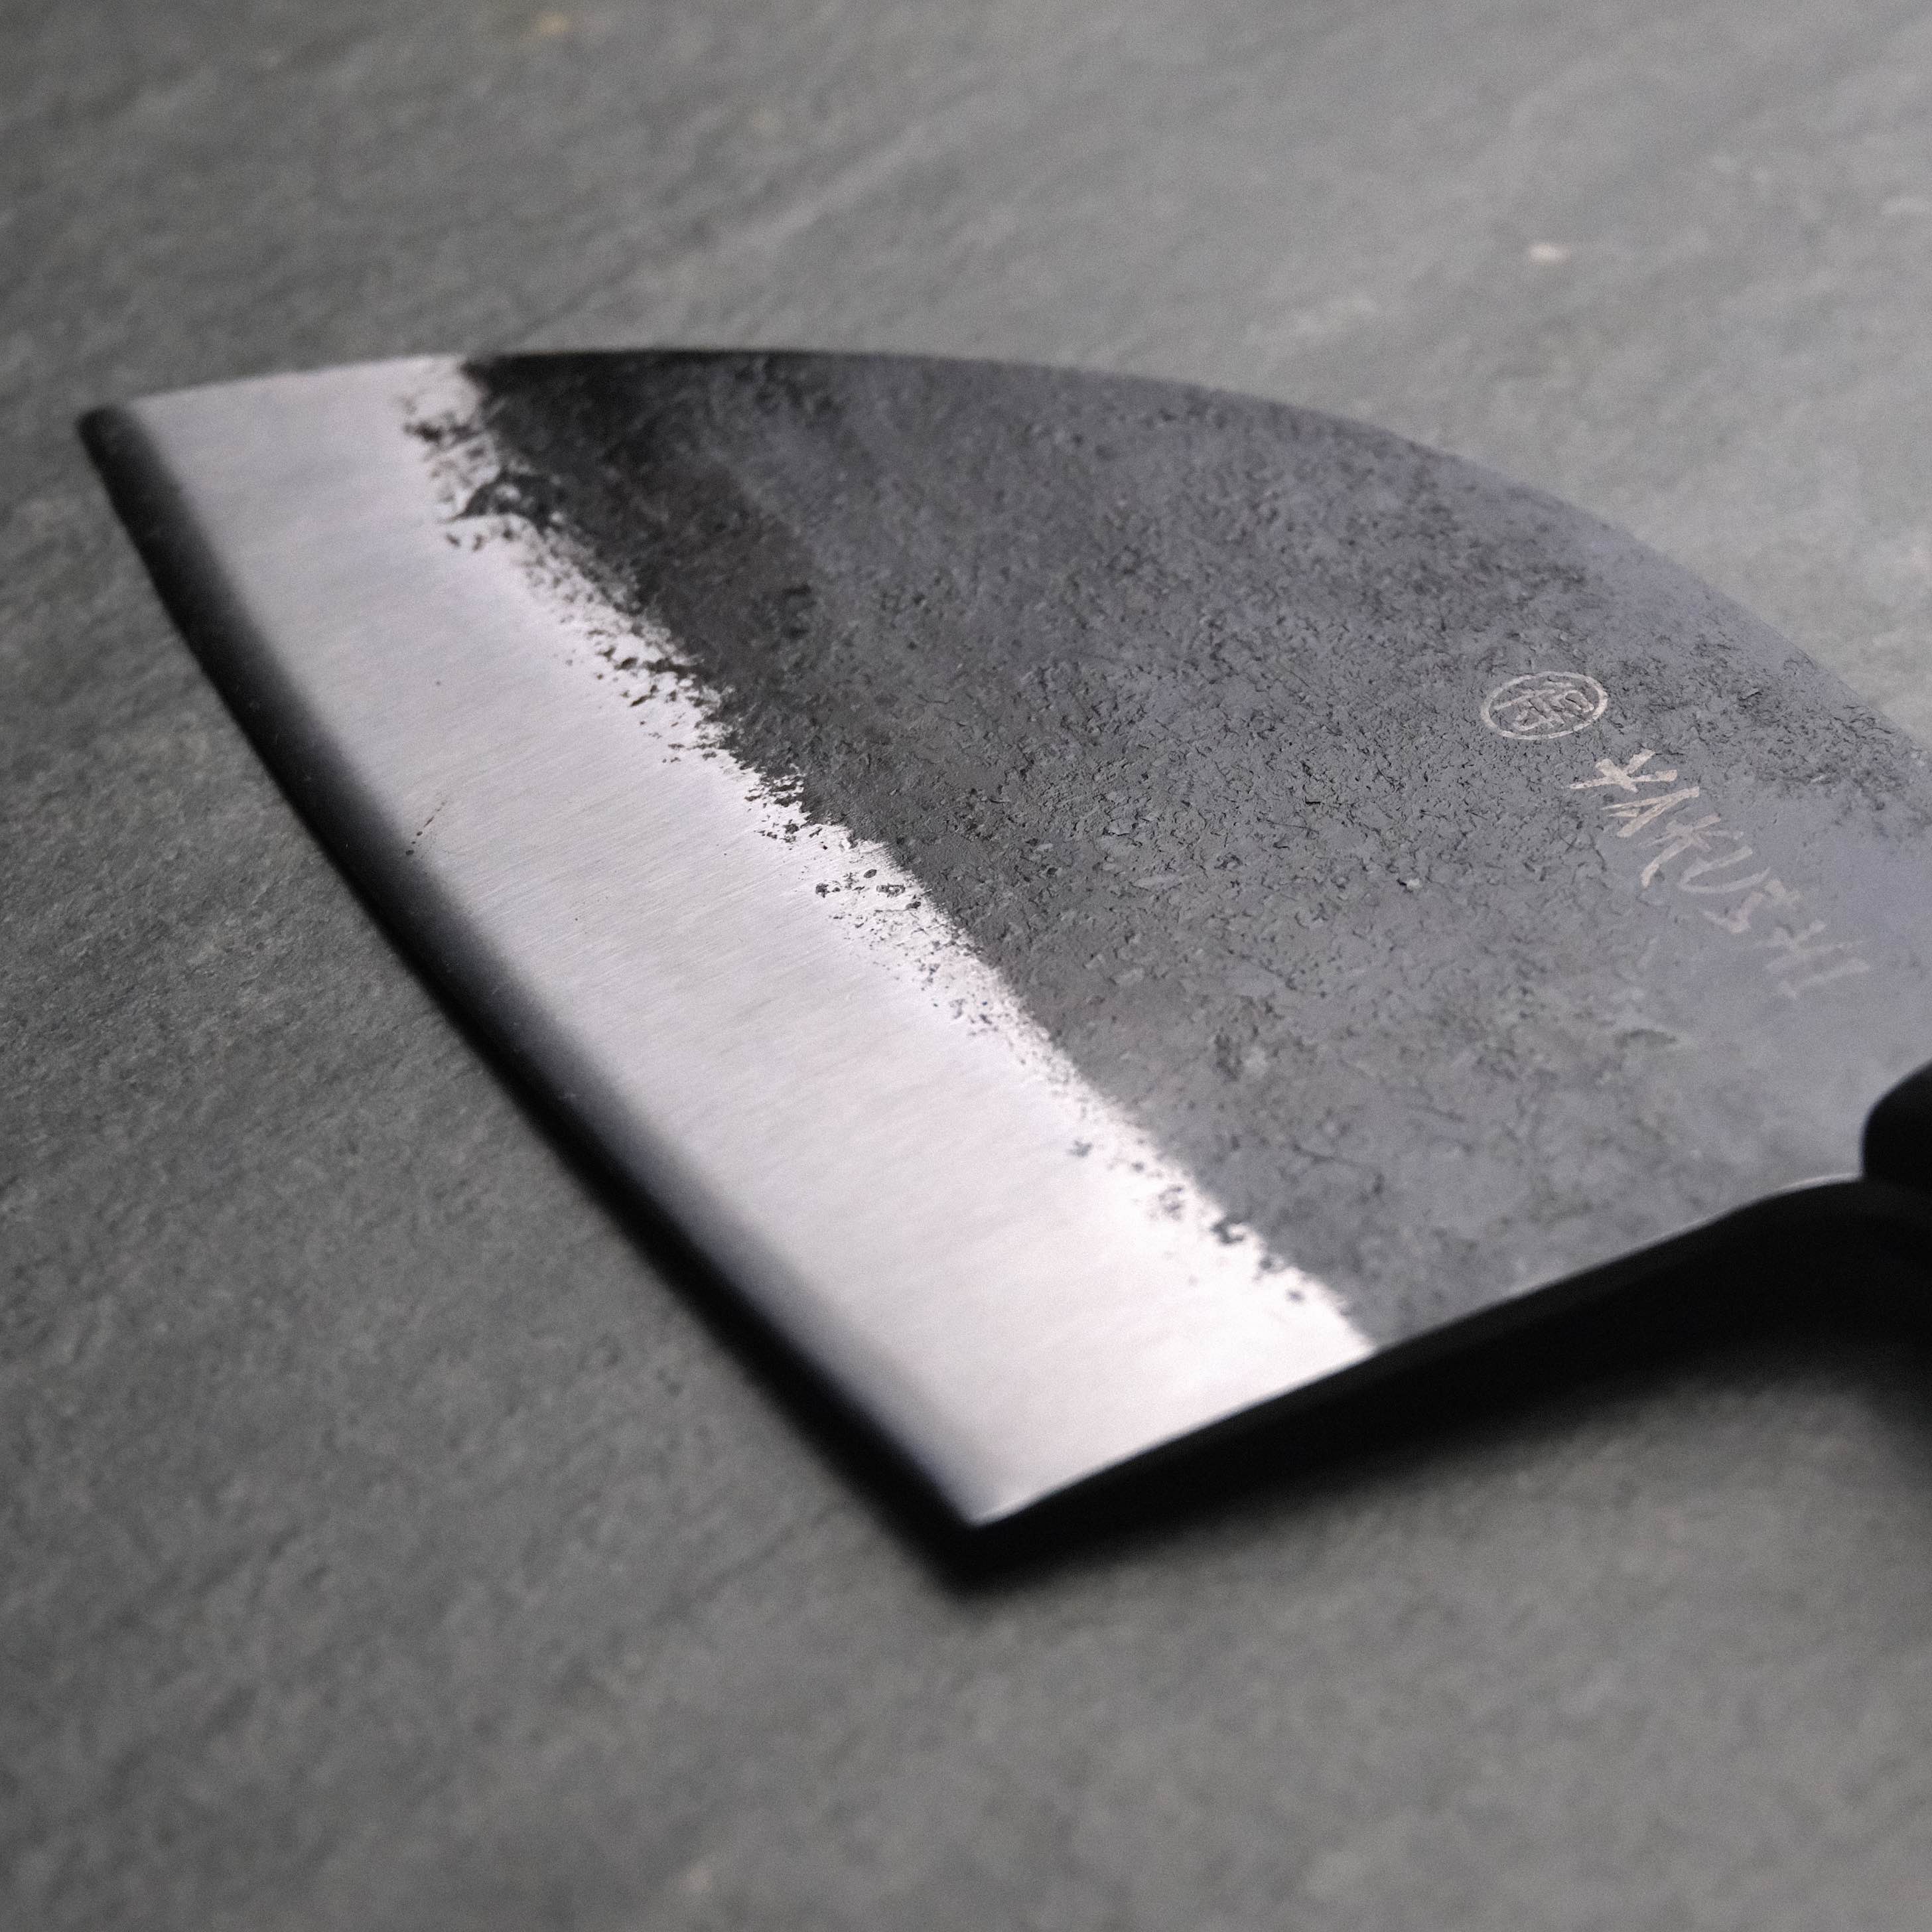 Serbian chef knife